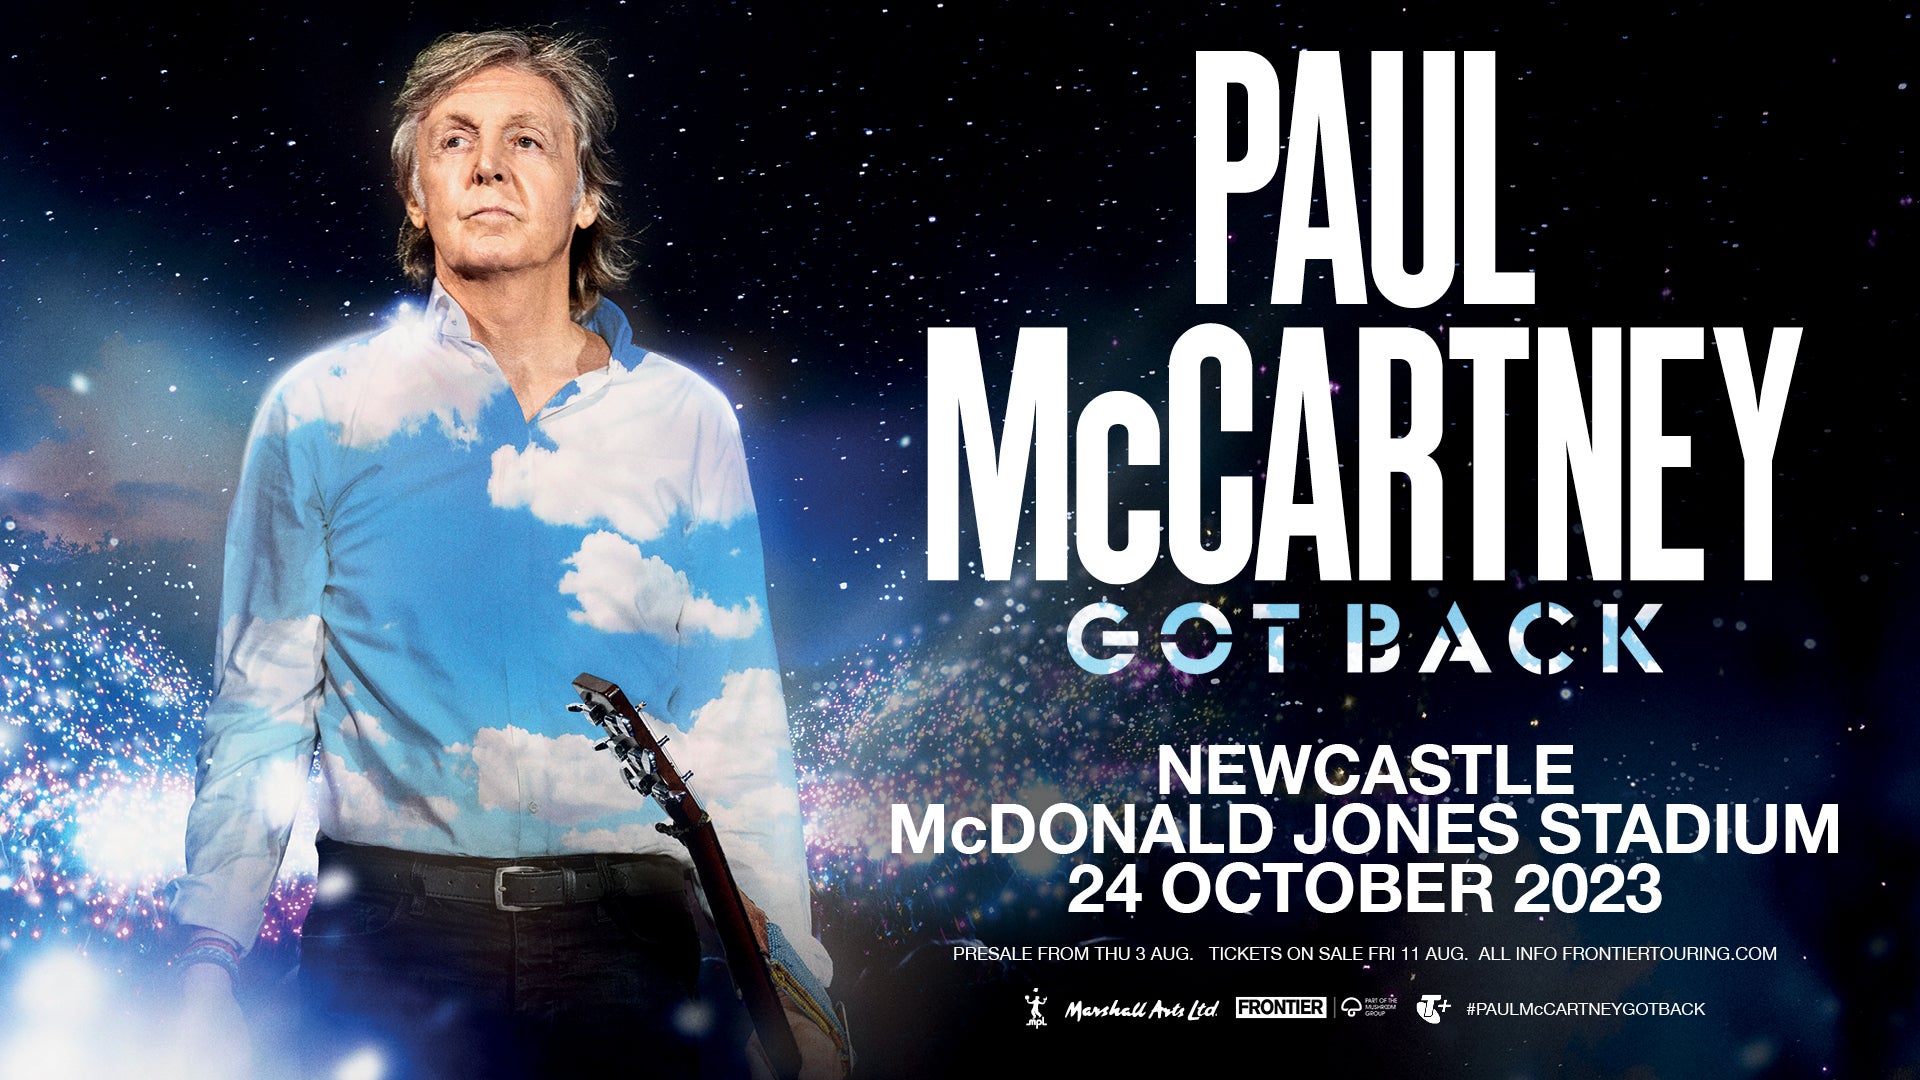 Paul McCartney Concert - McDonald Jones Stadium